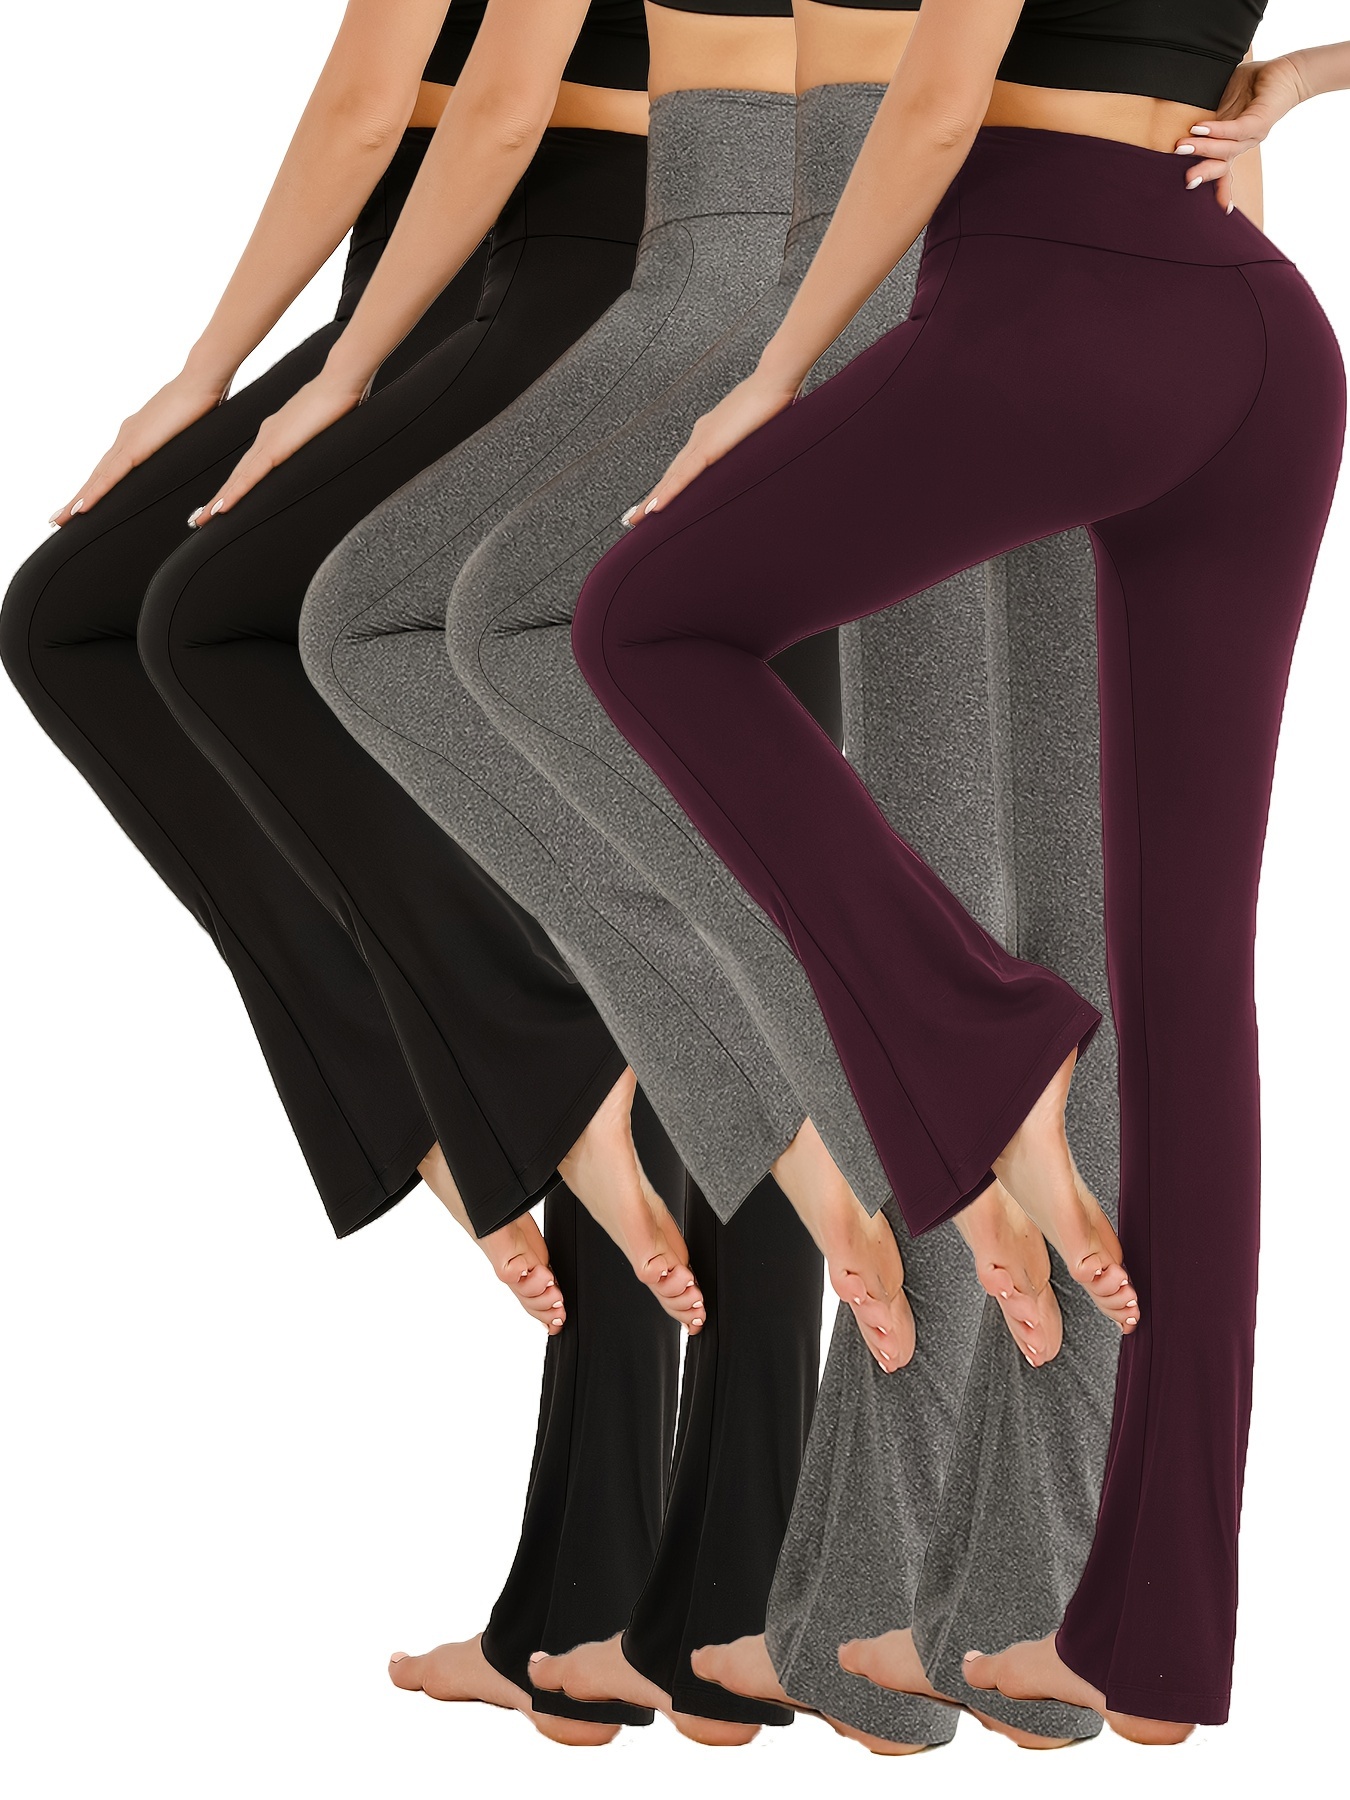 adviicd Yoga Pants For Women Yoga Pants Flare Womenâ€™s High Waist